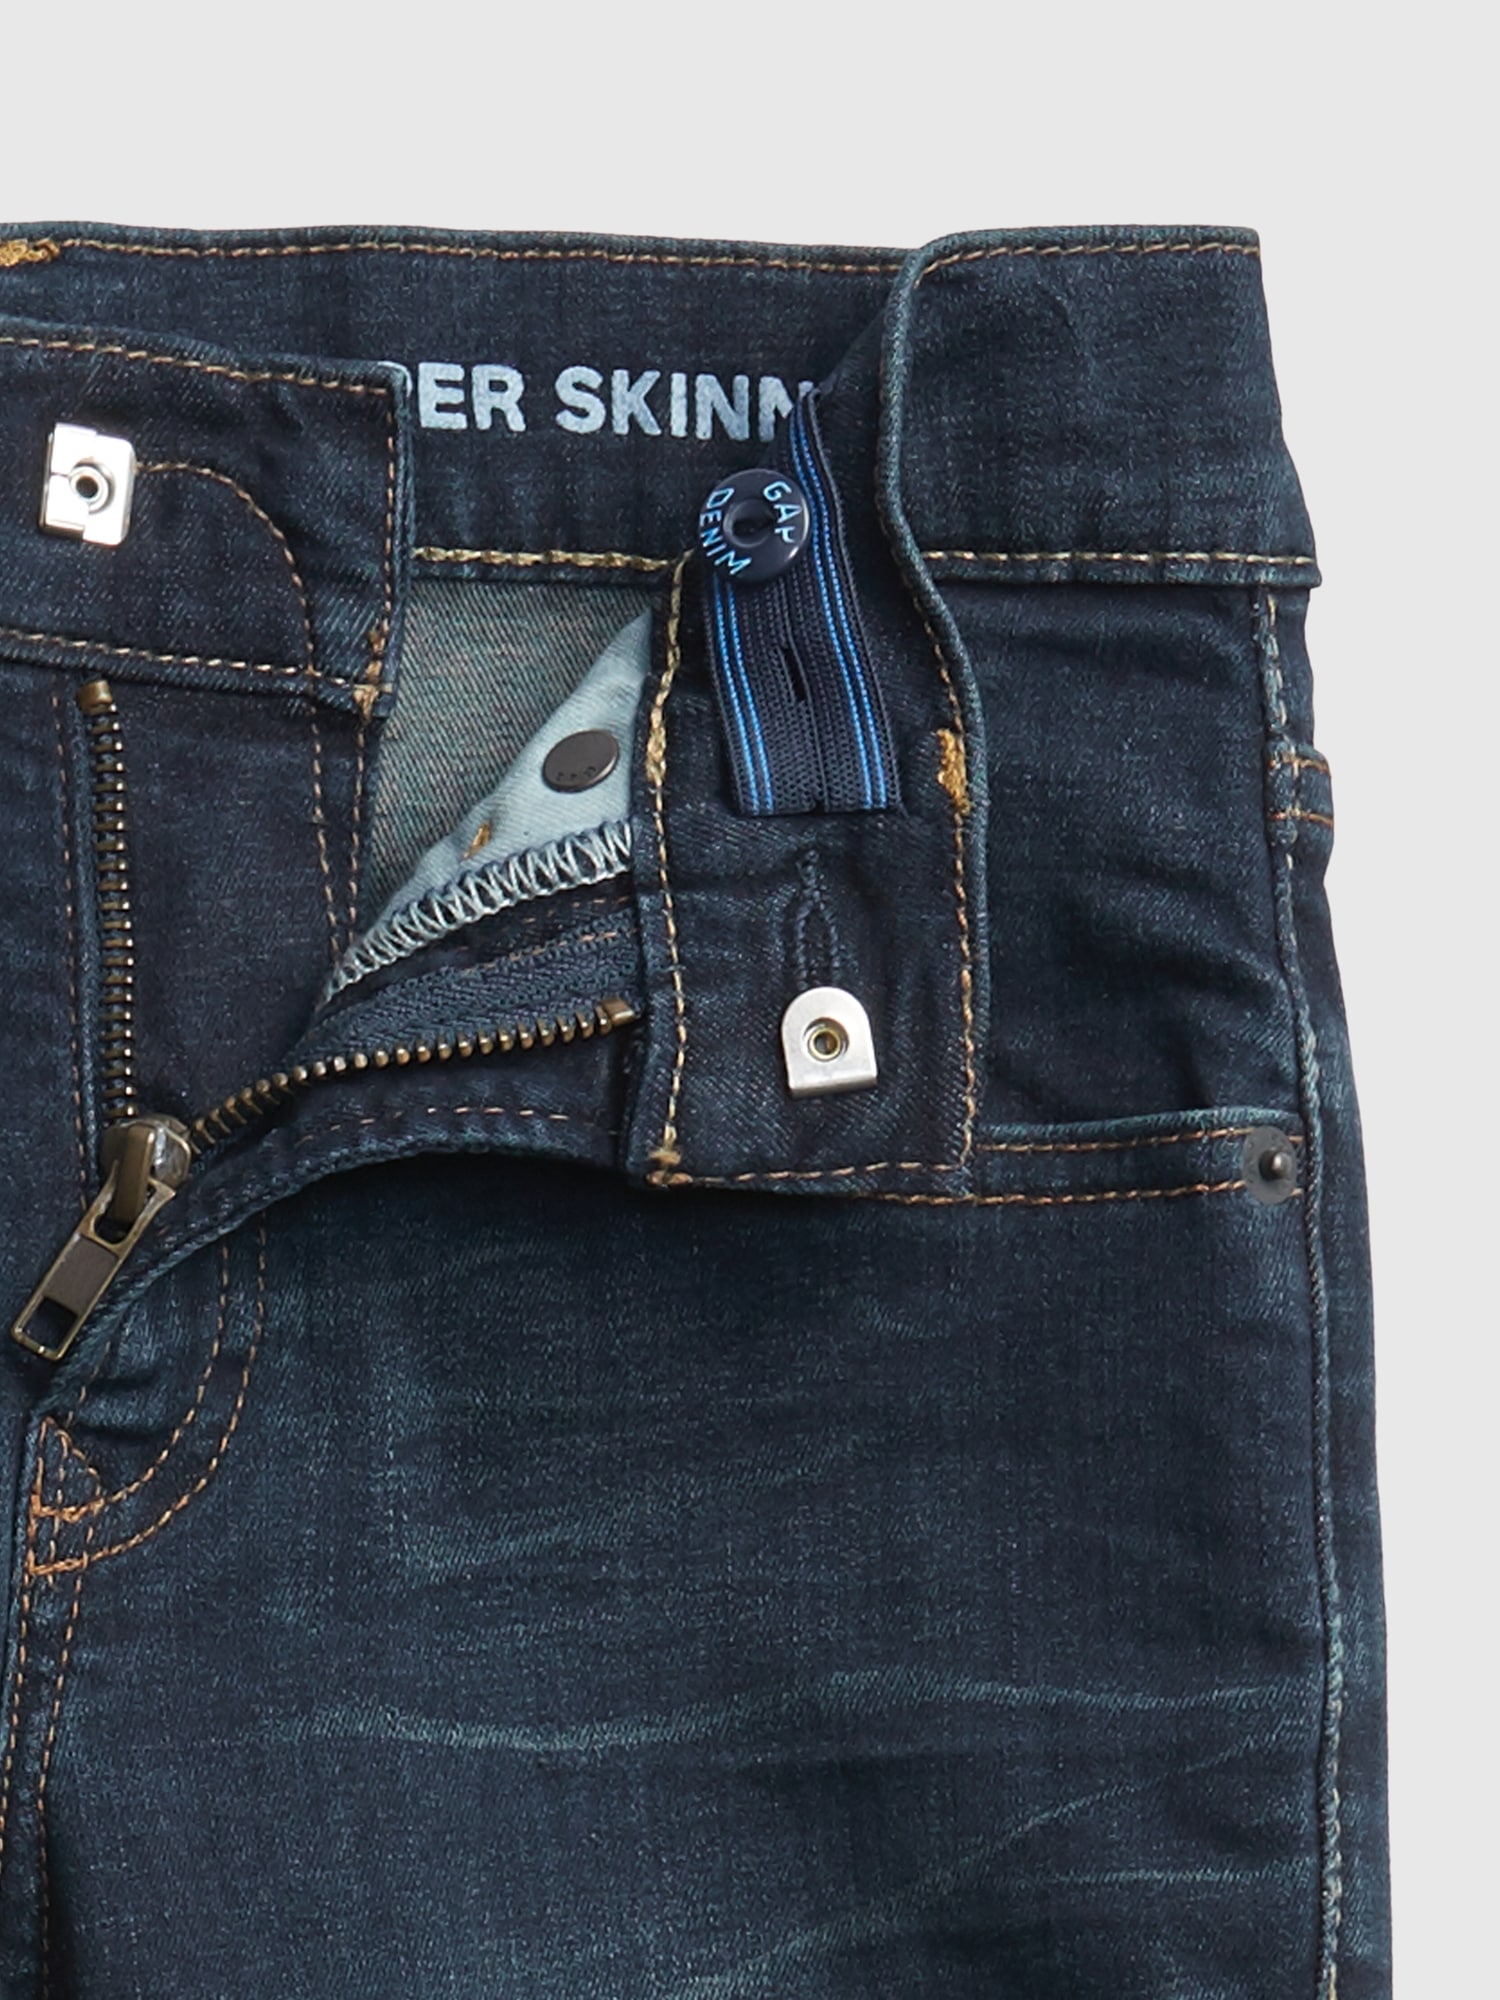 Kids Super Skinny Jeans with Washwell™ | Gap